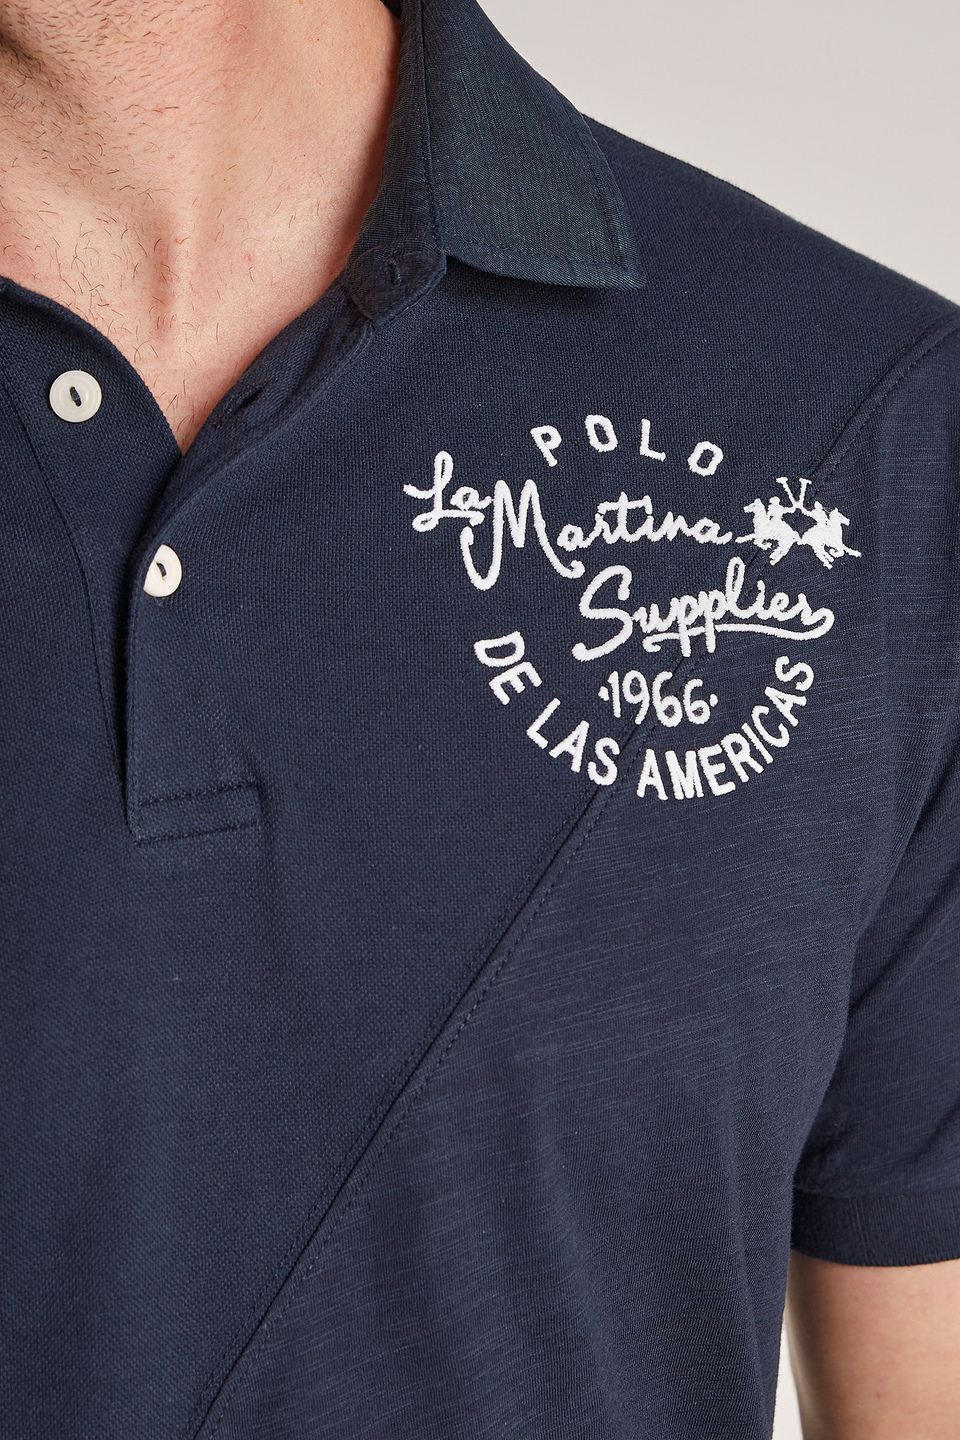 Men's plain-coloured short-sleeved, regular-fit polo shirt | La Martina - Official Online Shop